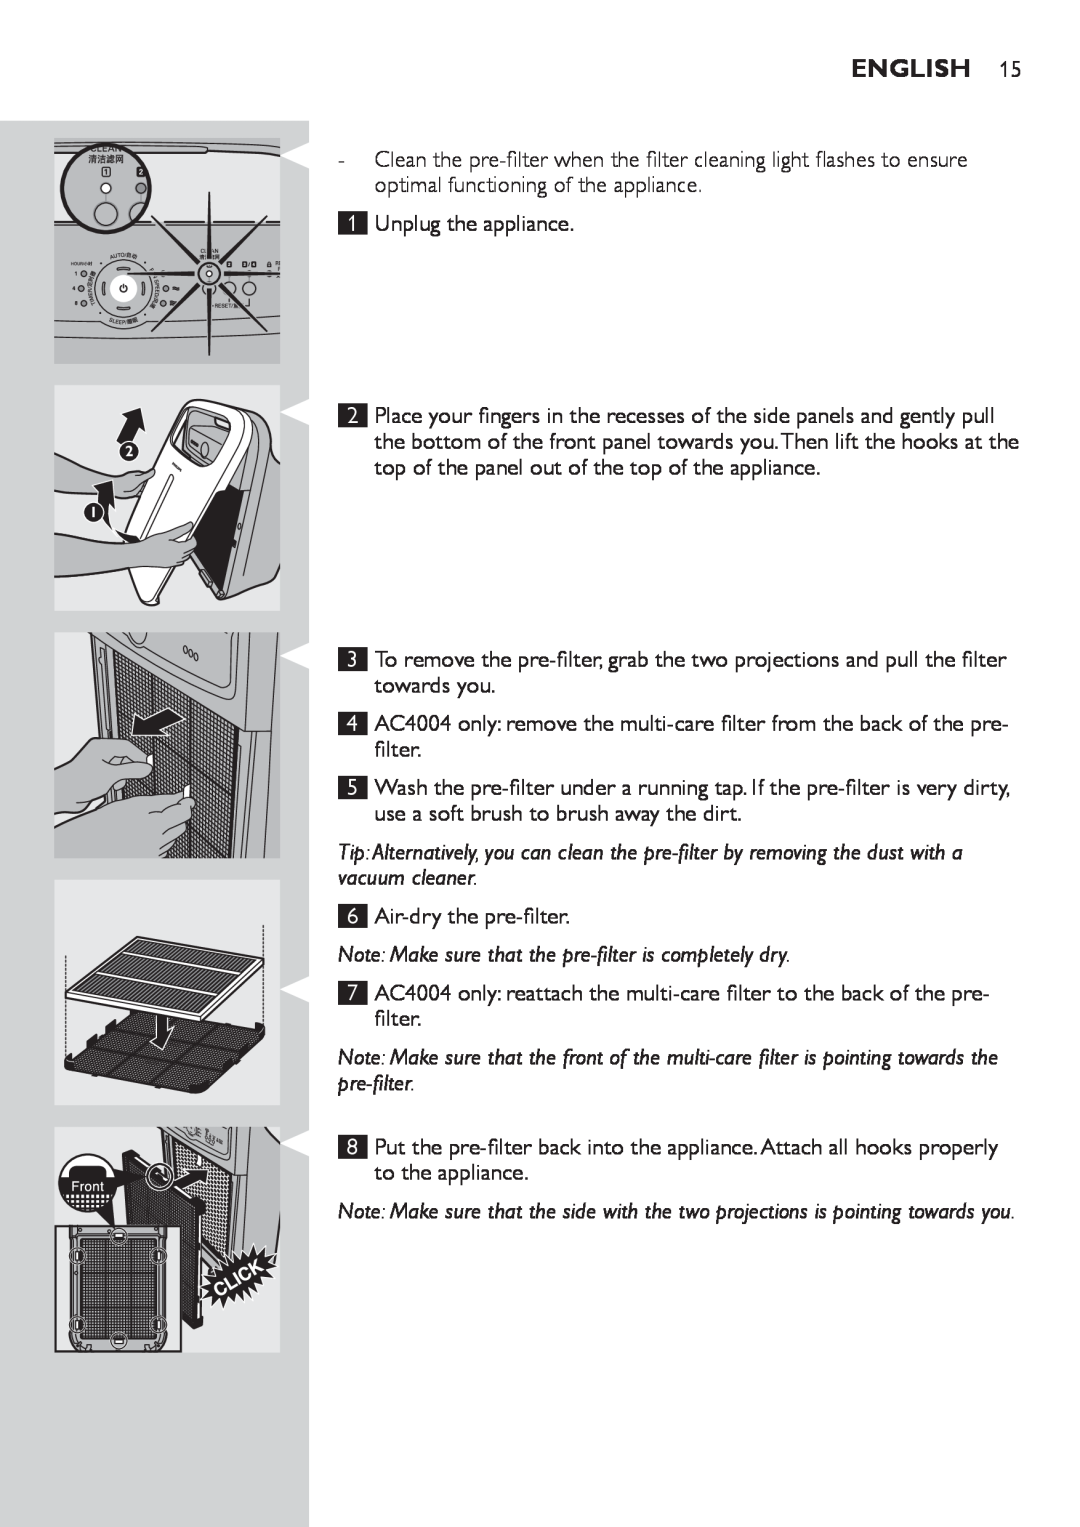 Philips AC4004, AC4002 user manual English, 1Unplug the appliance 